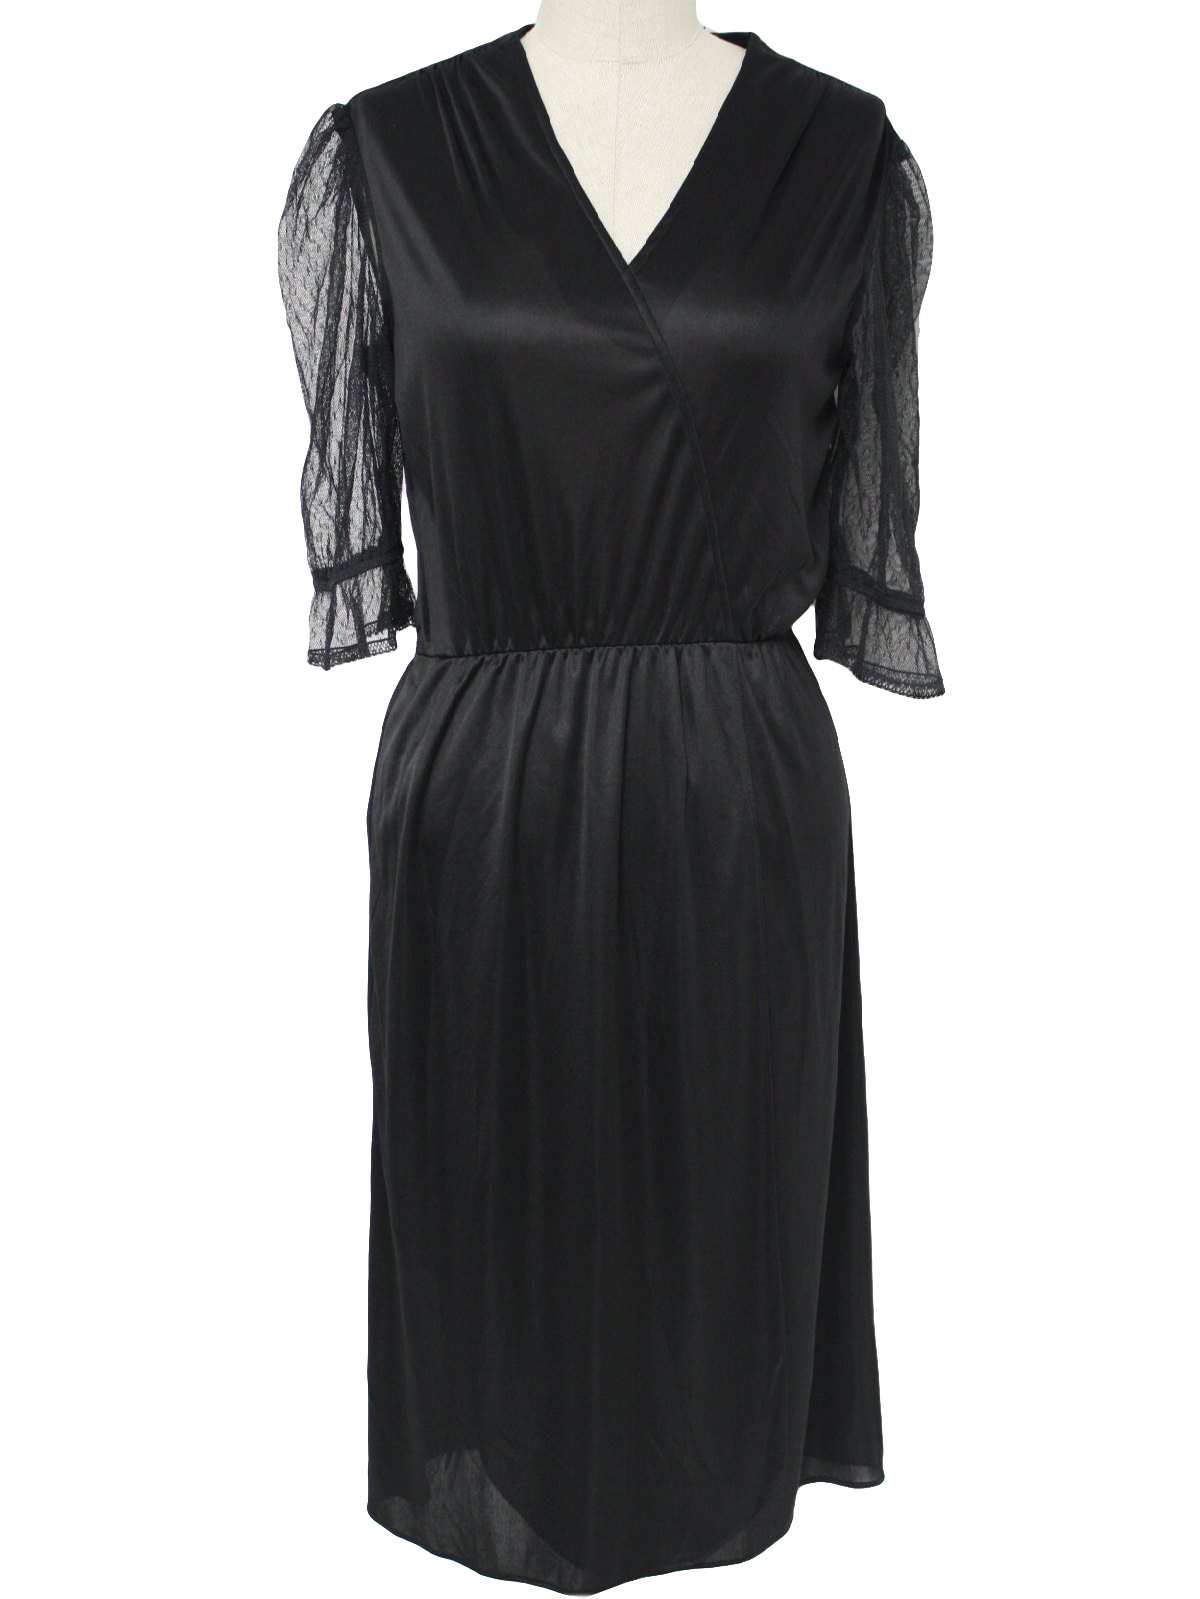 Blog about dresses: Jcpenney black dresses